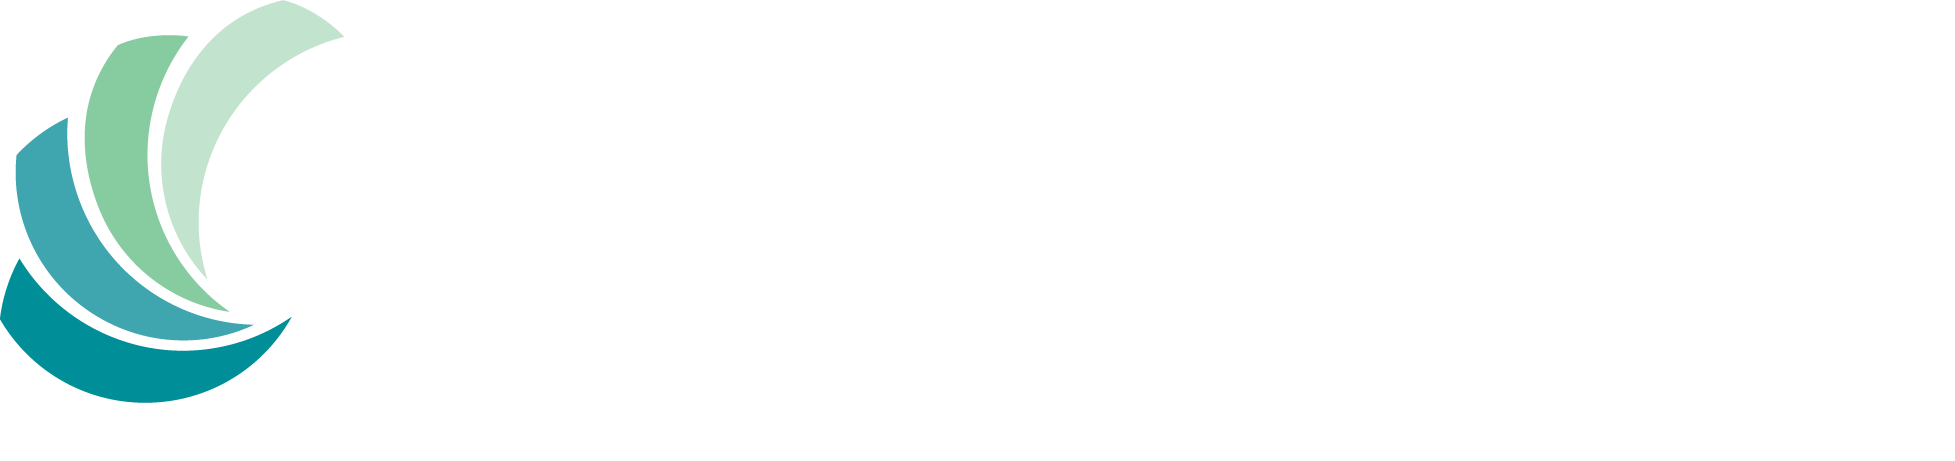 Givlaari logo